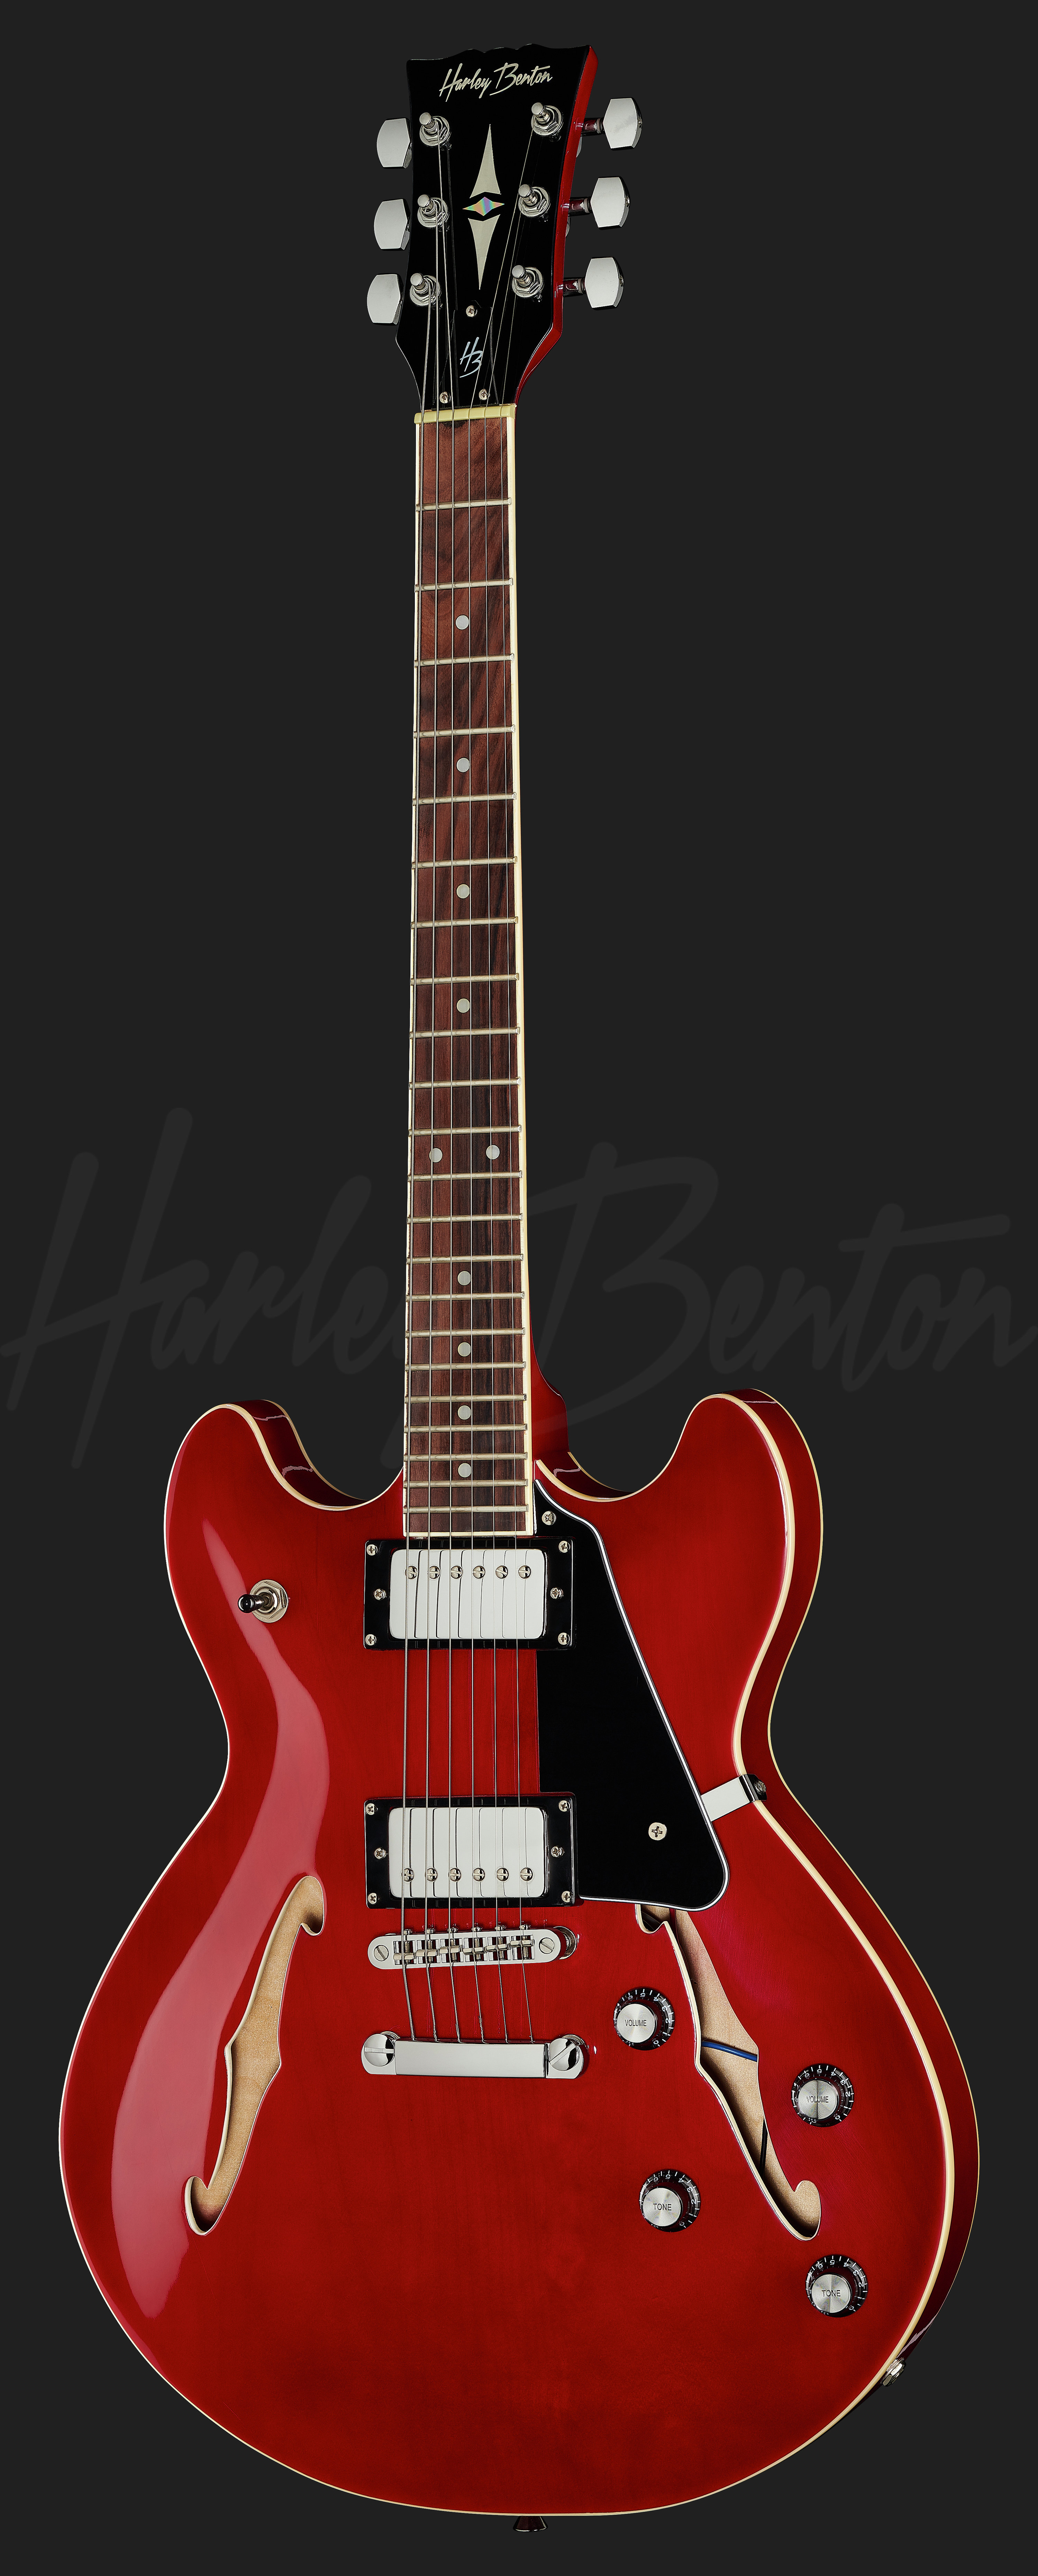 Harley Benton Guitar